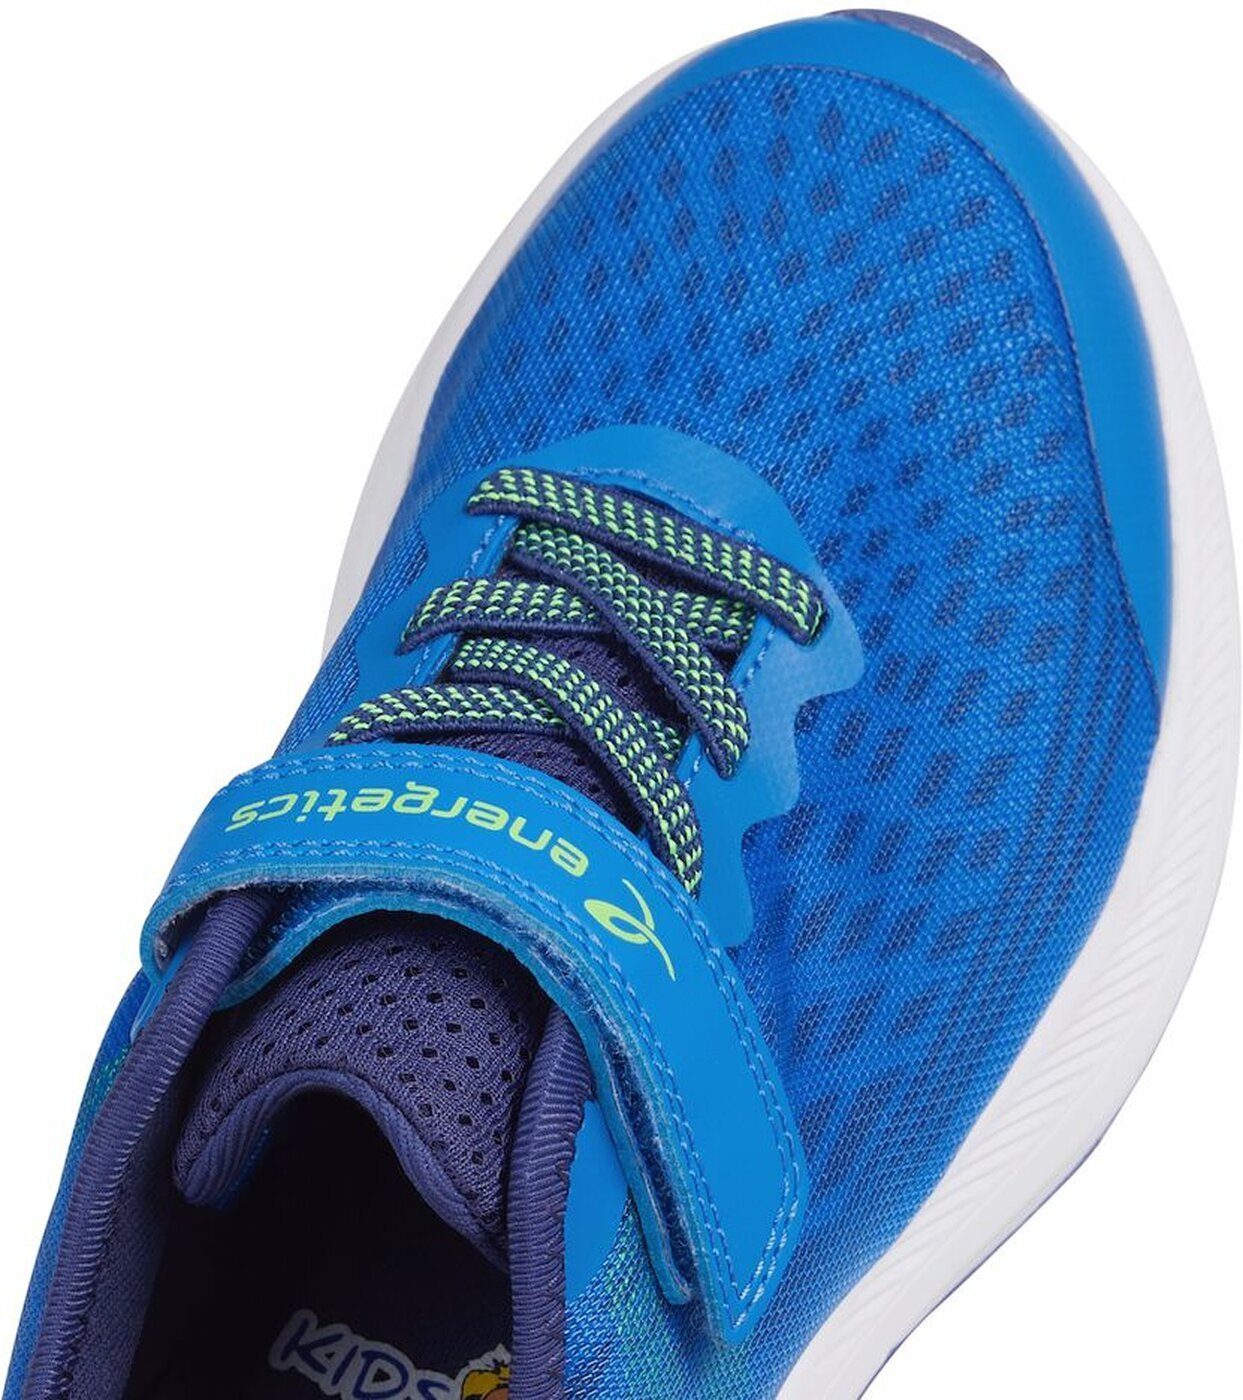 Energetics Ki.-Running-Schuh OZ 2.4 ROYAL/BLUE BLUE DARK Laufschuh J V/L